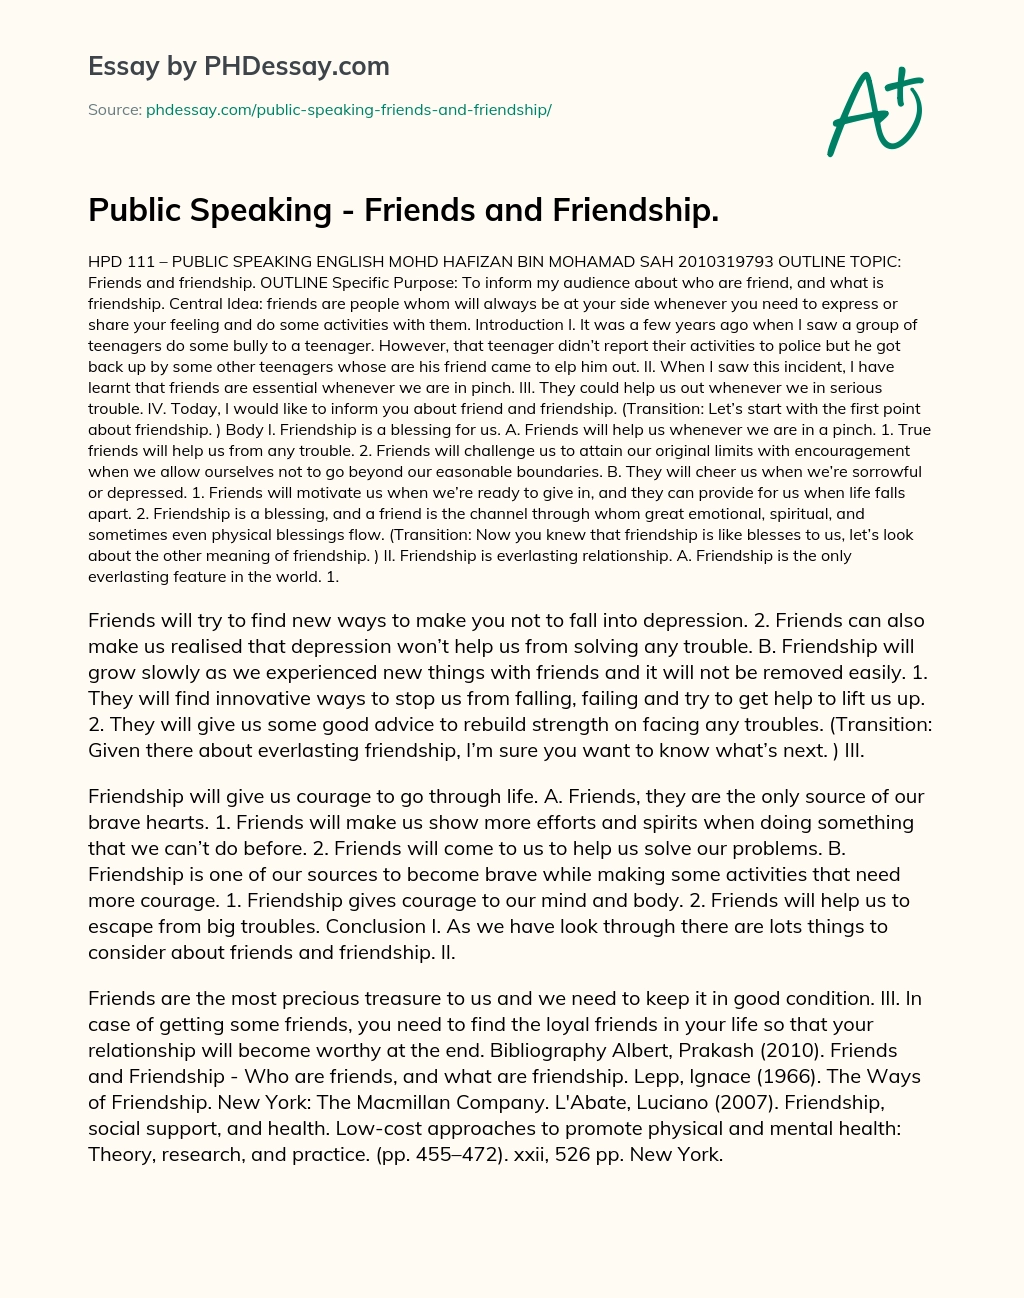 Public Speaking – Friends and Friendship. essay